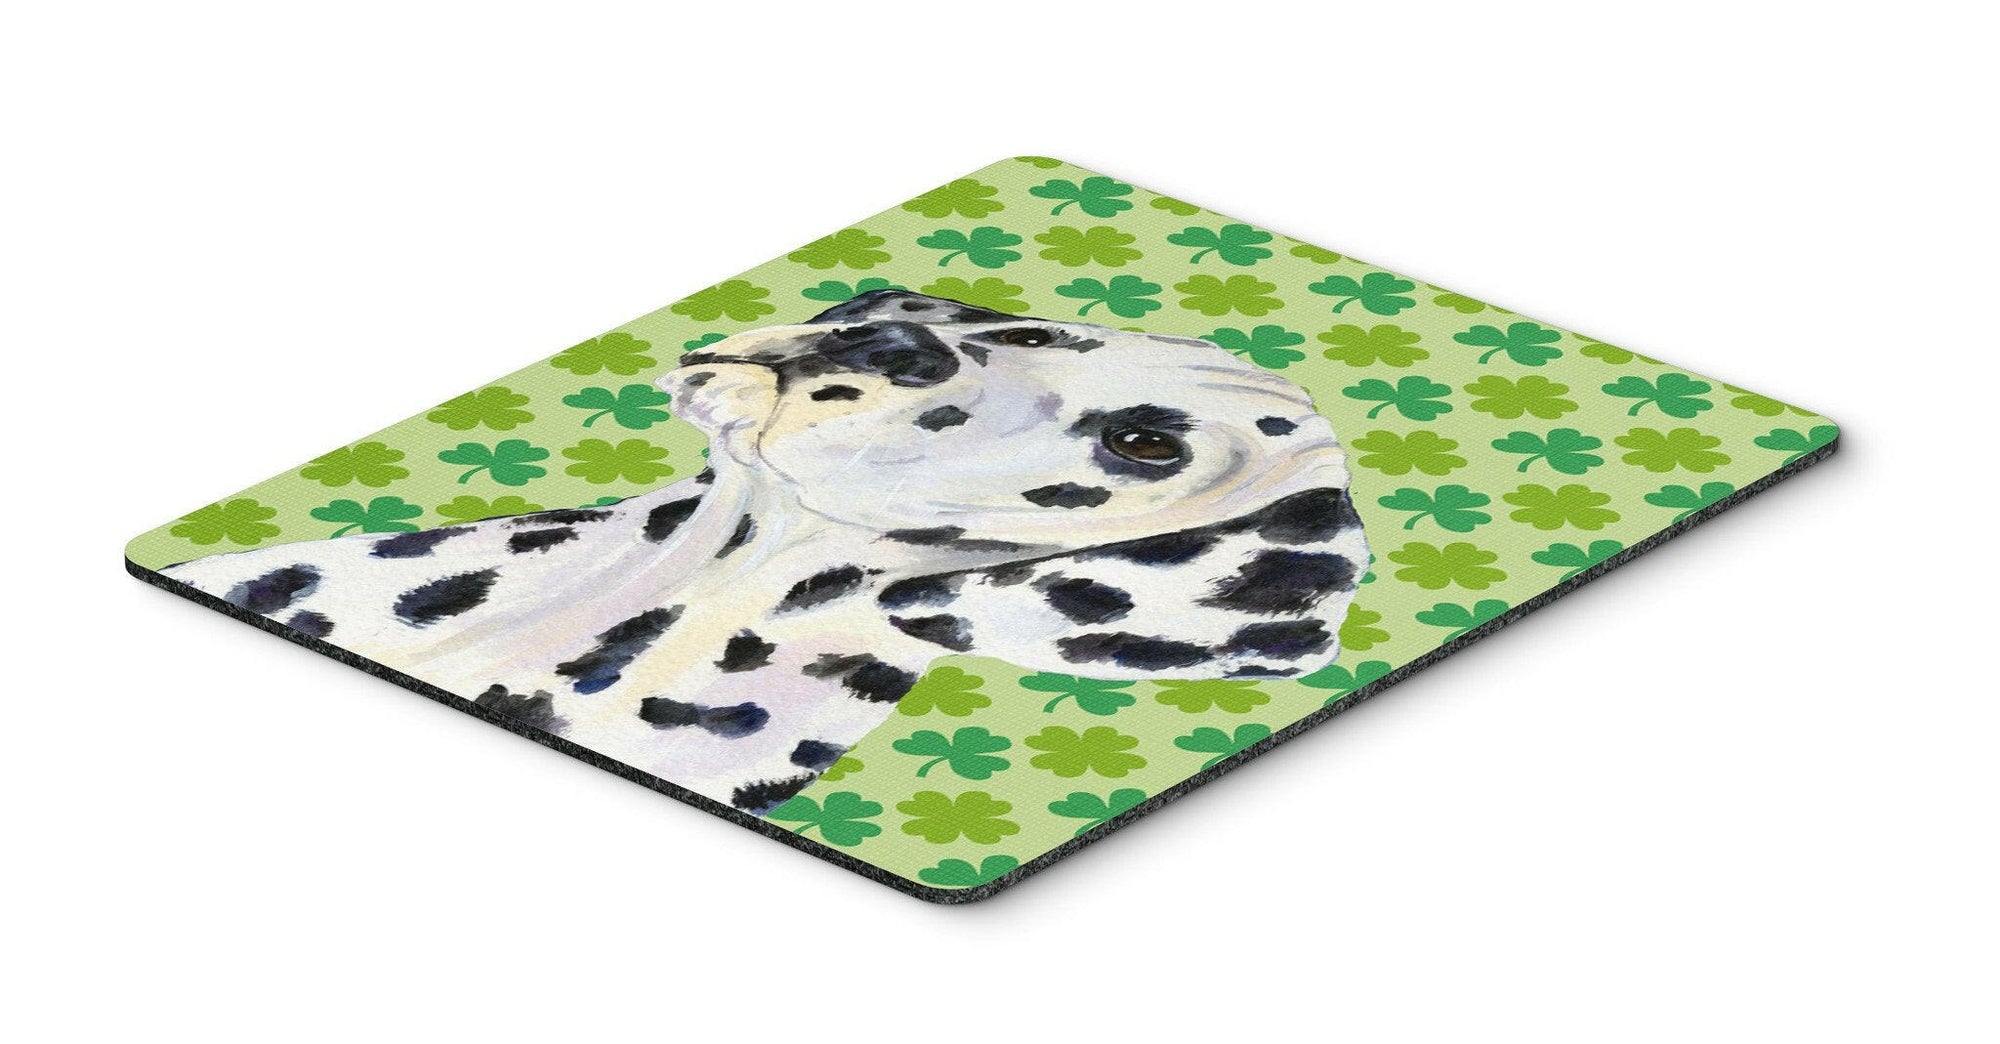 Dalmatian St. Patrick's Day Shamrock Portrait Mouse Pad, Hot Pad or Trivet by Caroline's Treasures